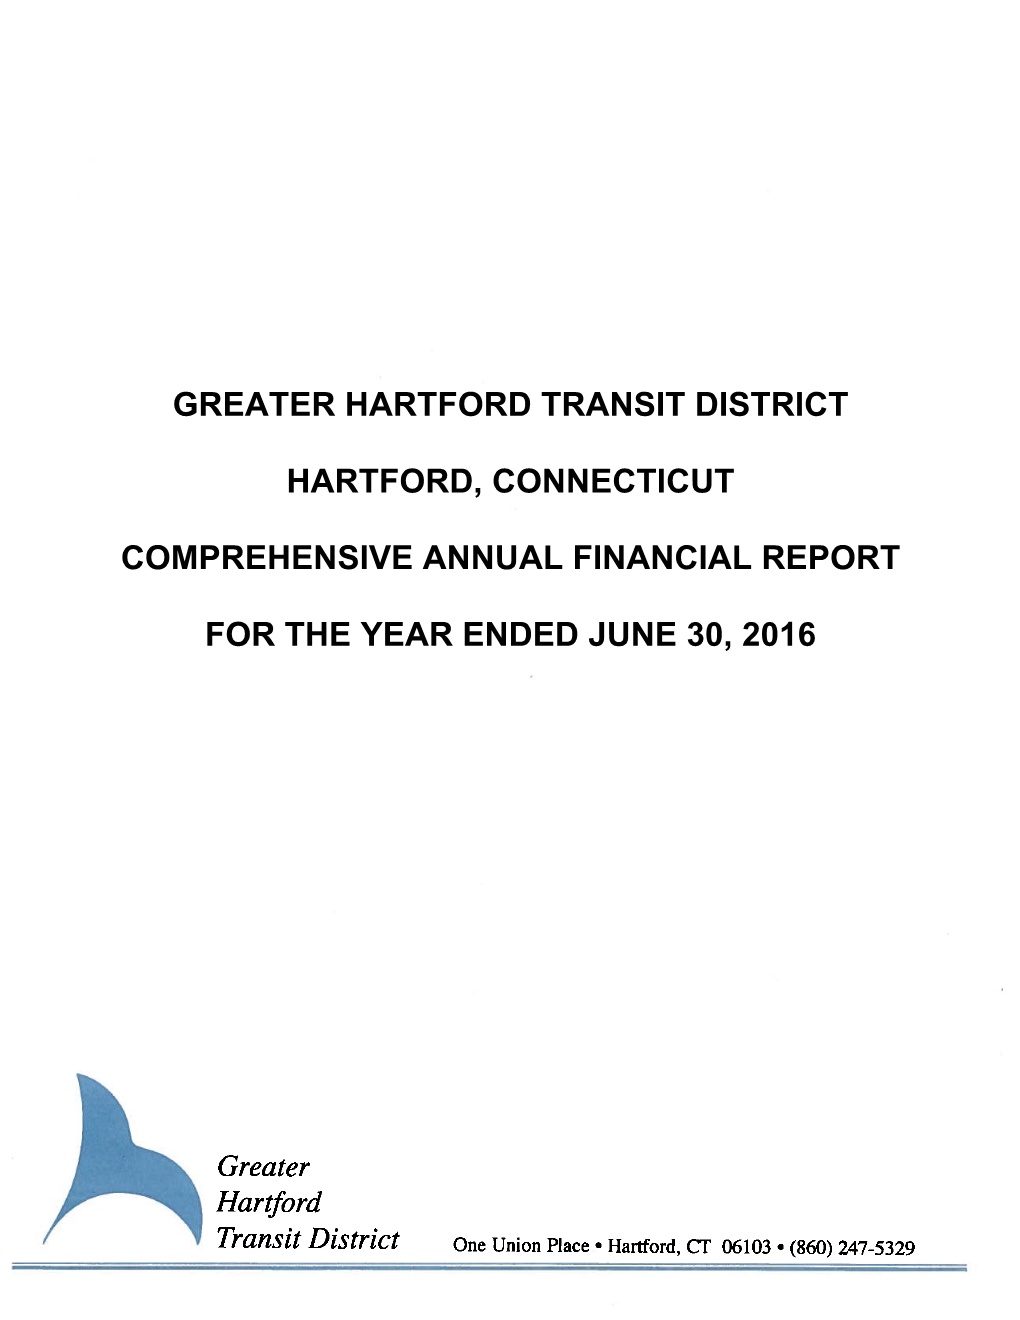 Greater Hartford Transit District Hartford, Connecticut